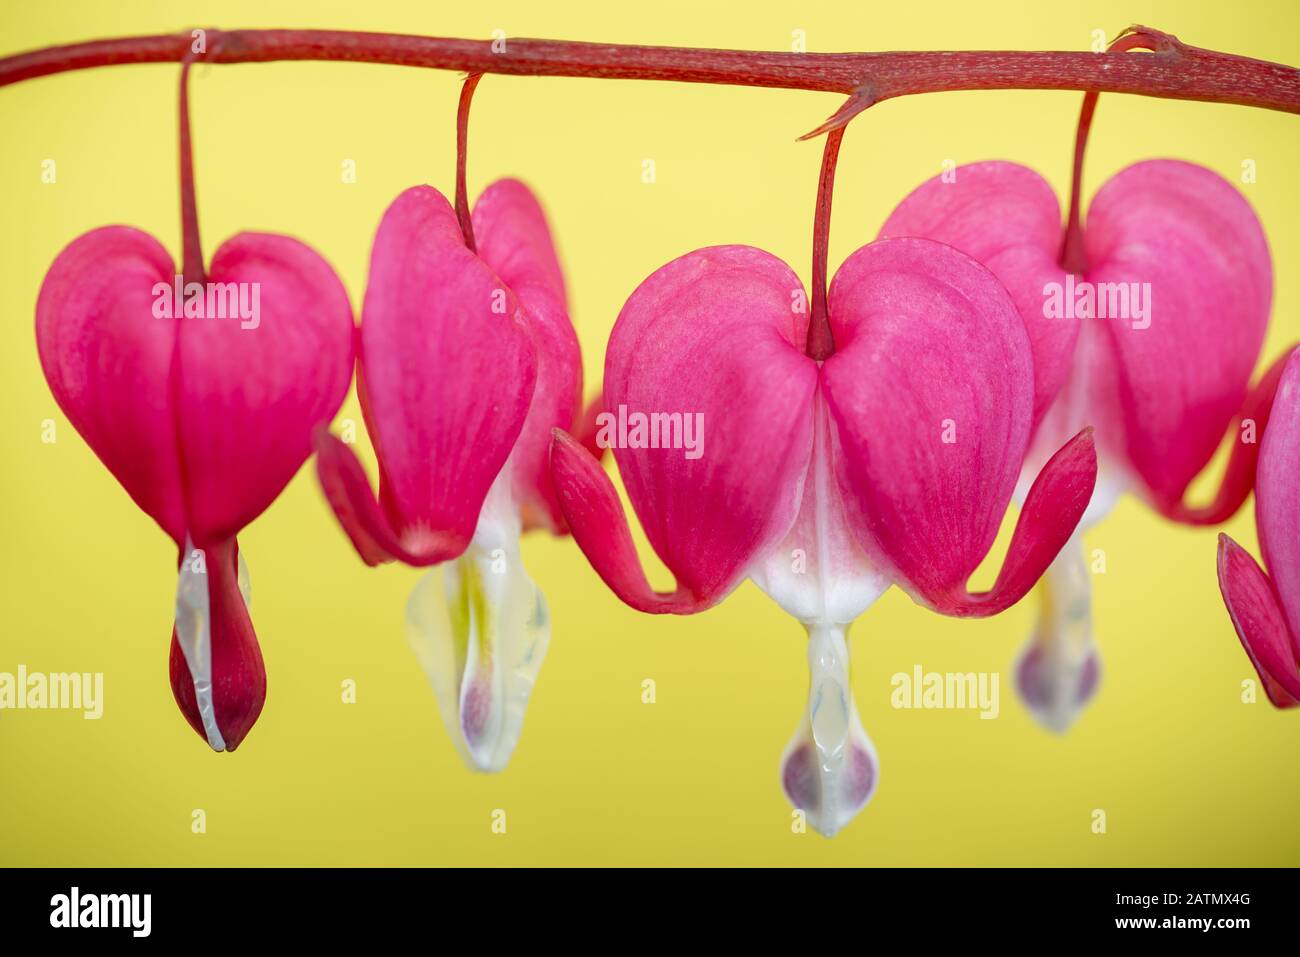 Bleeding heart flowers close up on yellow background (Lamprocapnos spectabilis) Stock Photo